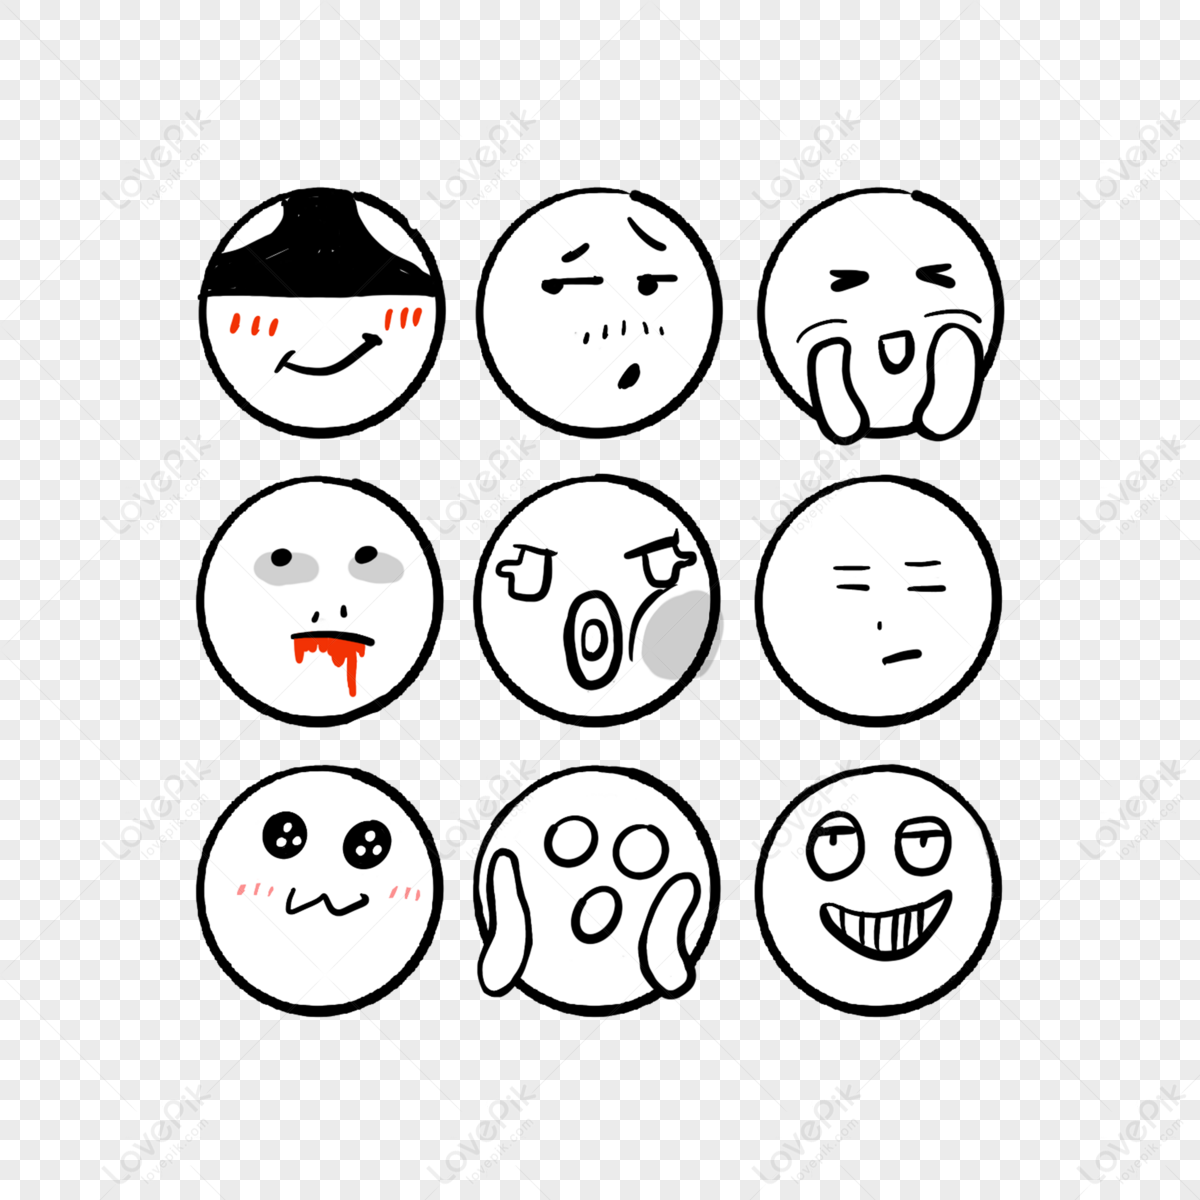 Stick Figure Expression Pack PNG Imagens Gratuitas Para Download - Lovepik